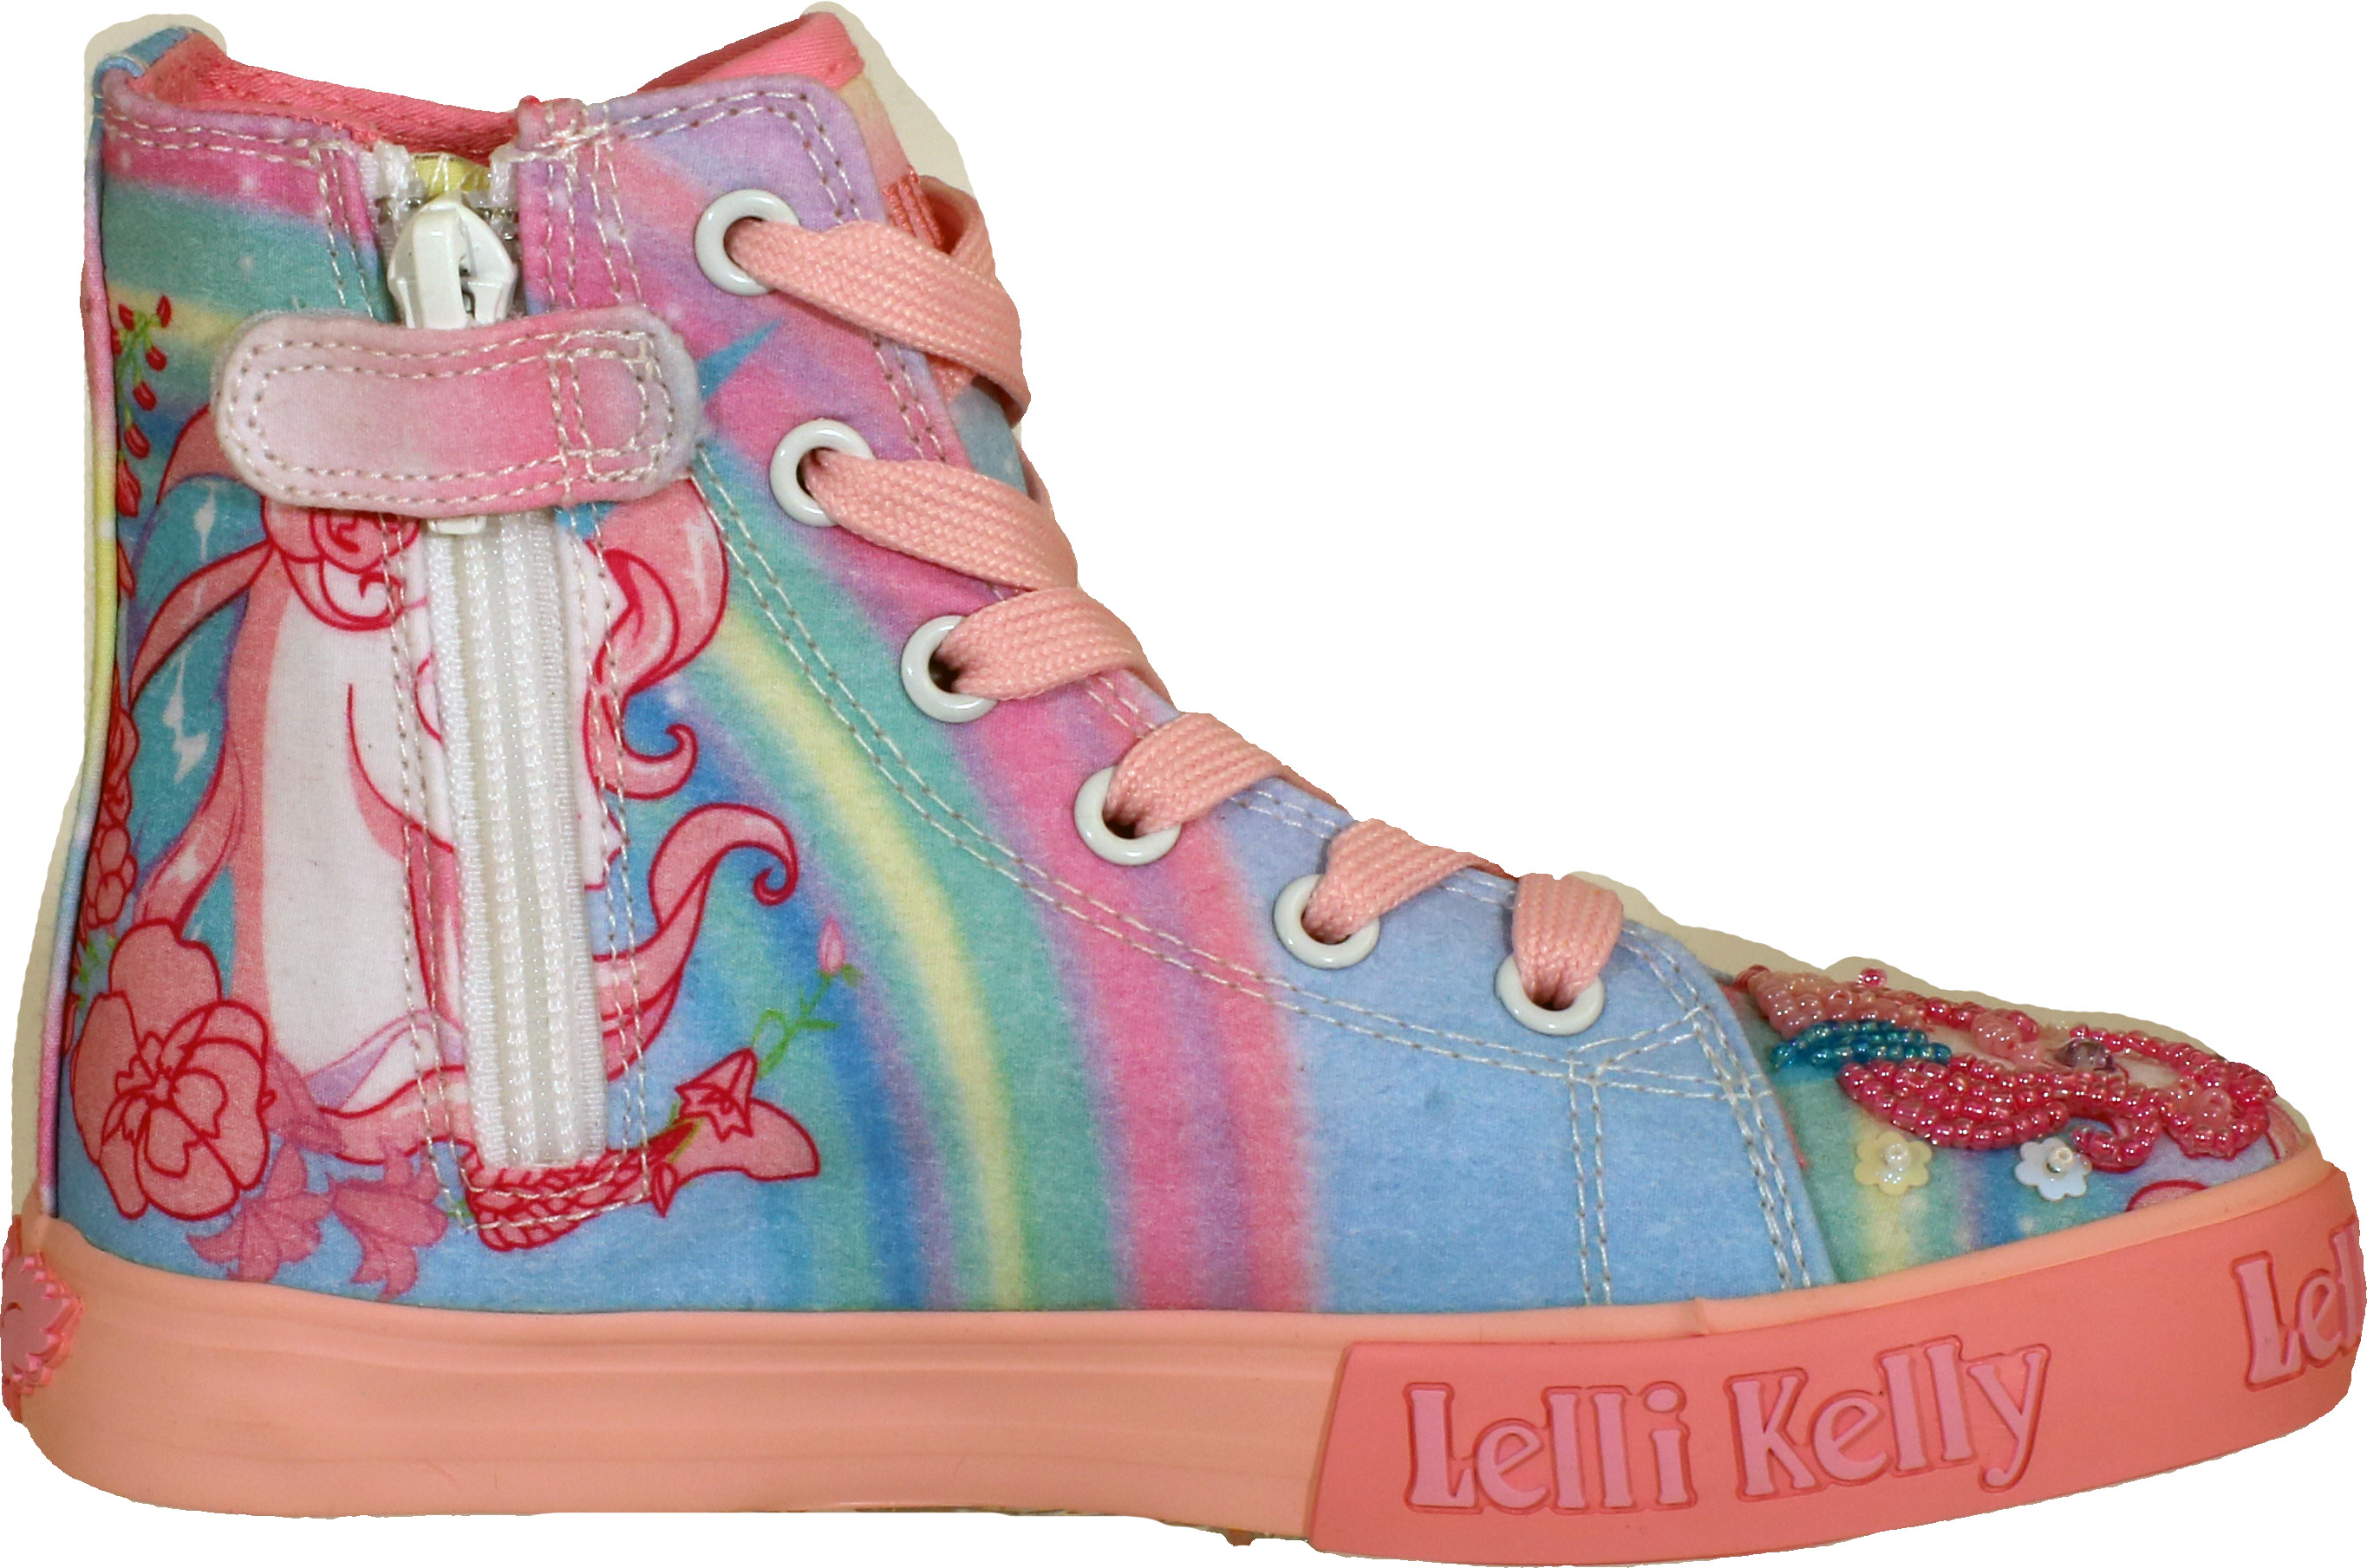 Lelli Kelly Sneaker High - Einhorn - Multi Rose Synthetics